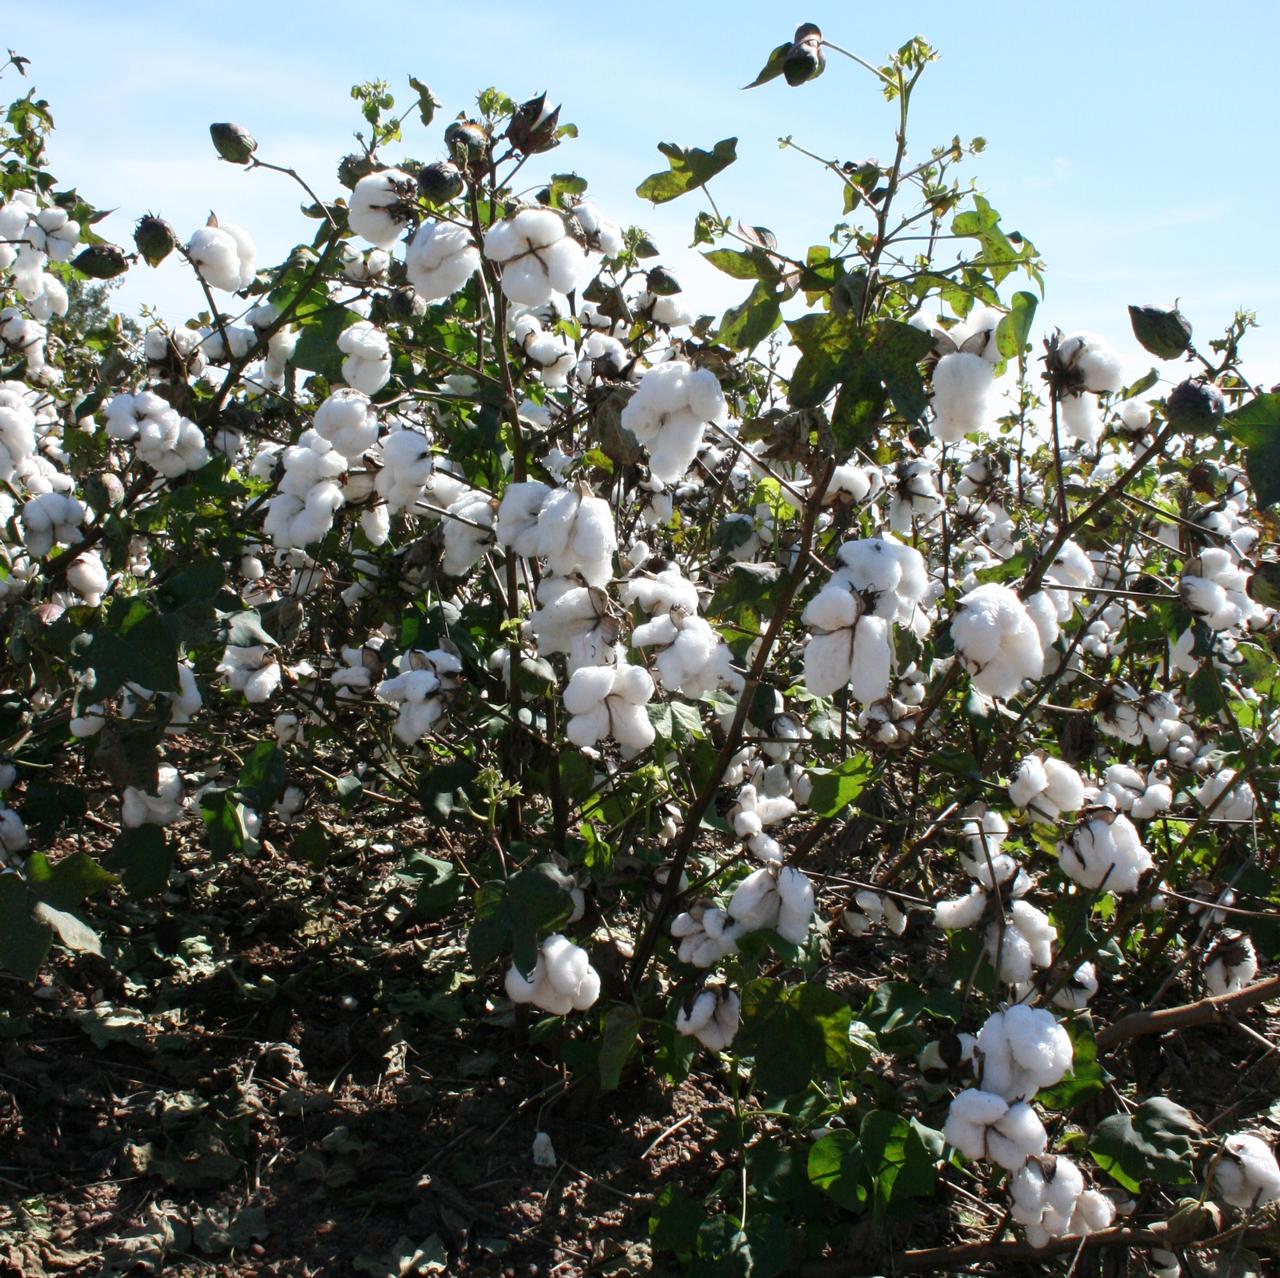 Georgia cotton farmers: U.S. Trust Protocol wants you!